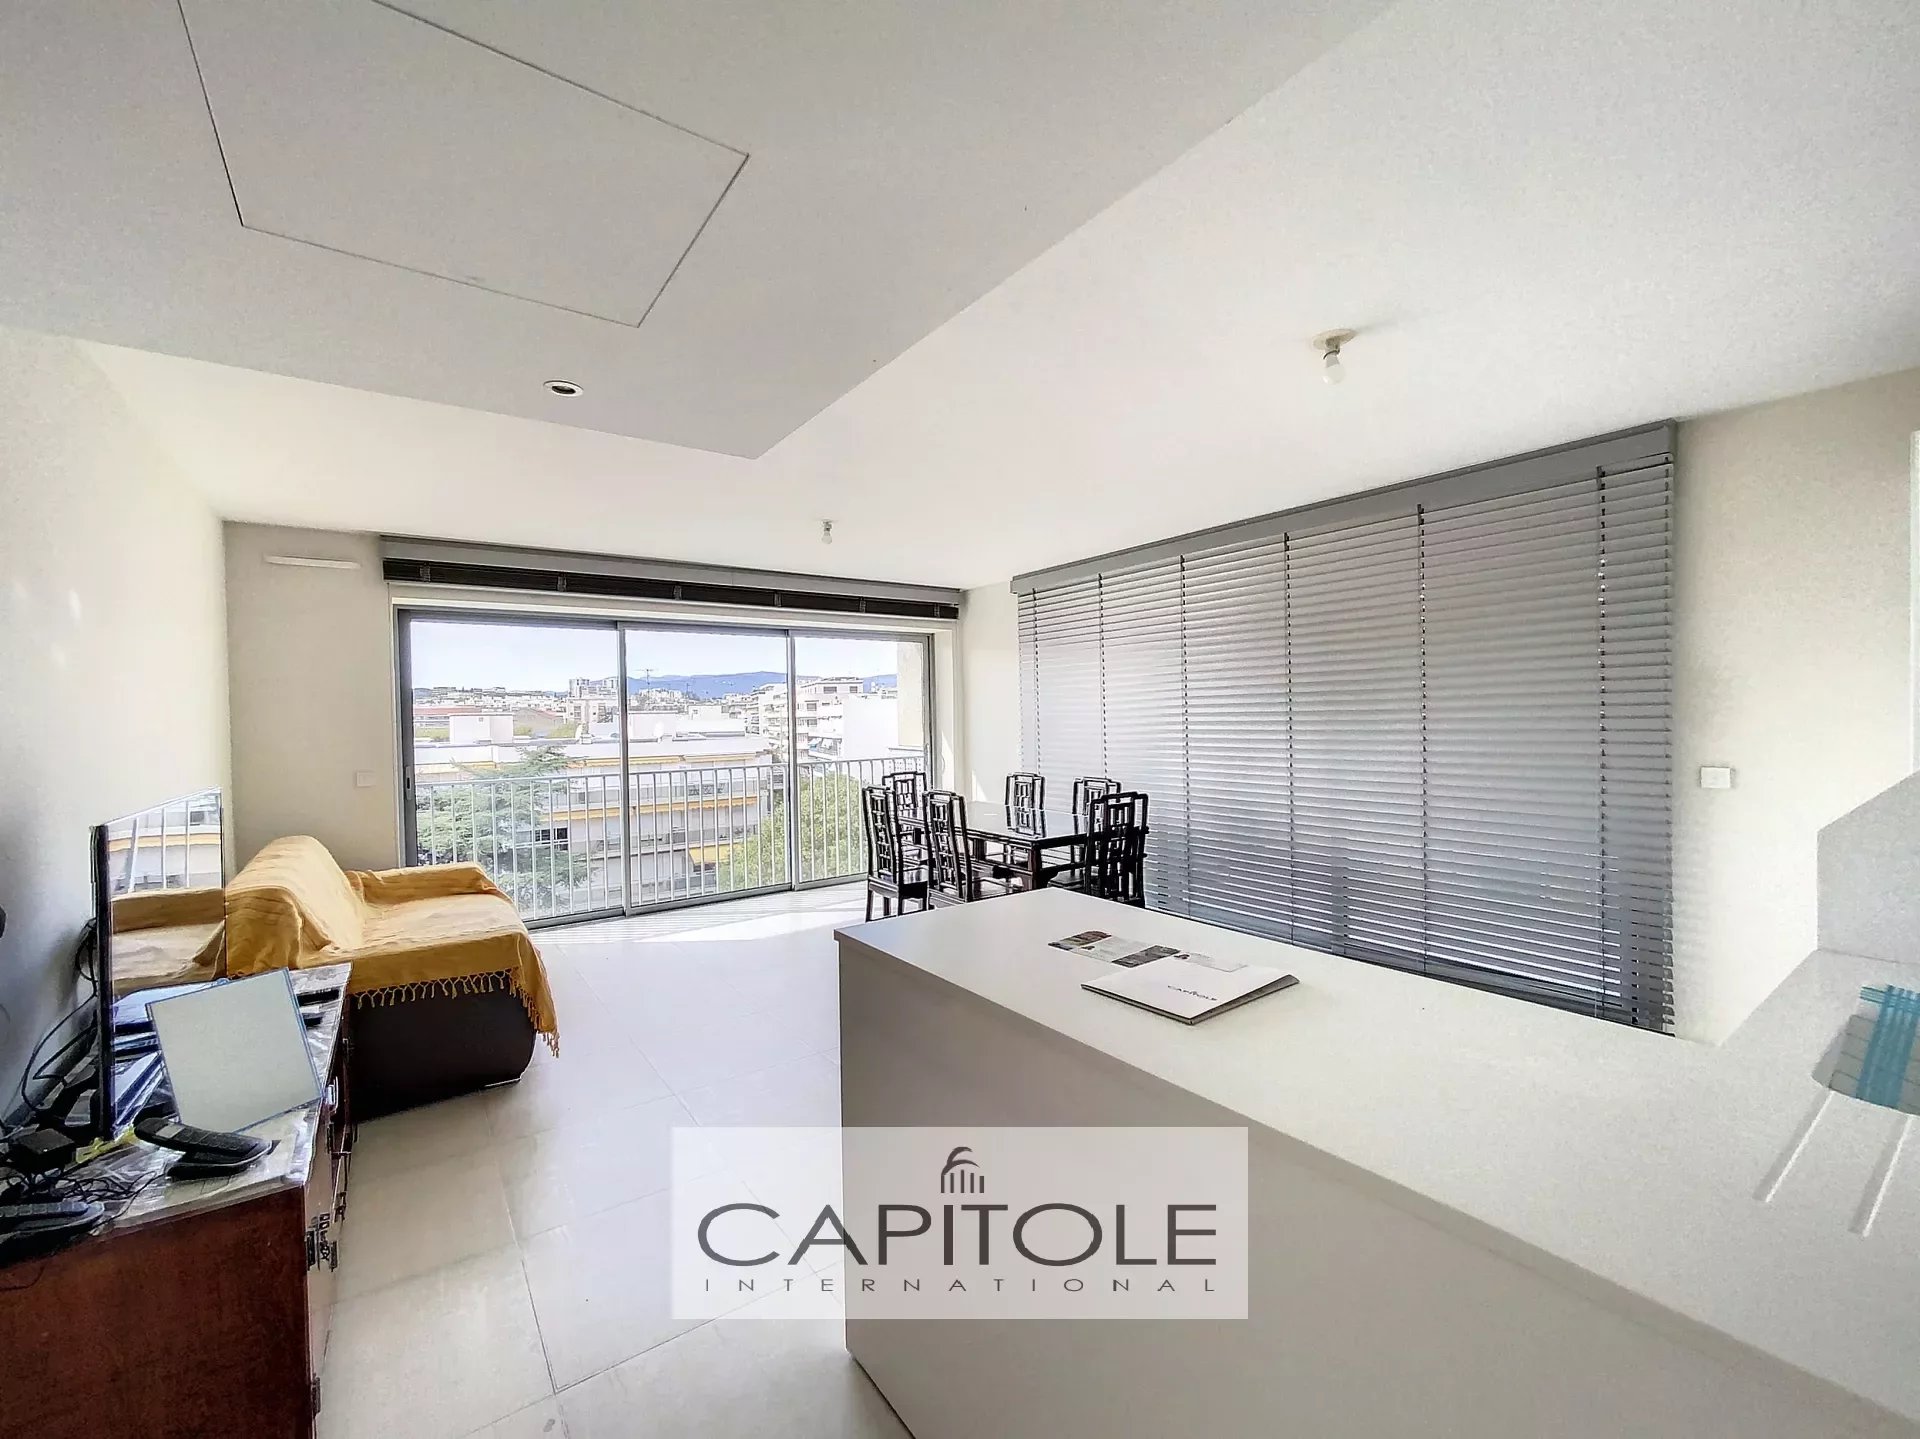 For sale, ANTIBES near PONTEIL beach, 92 m² 3 bedroom apartment, terrace, double garage